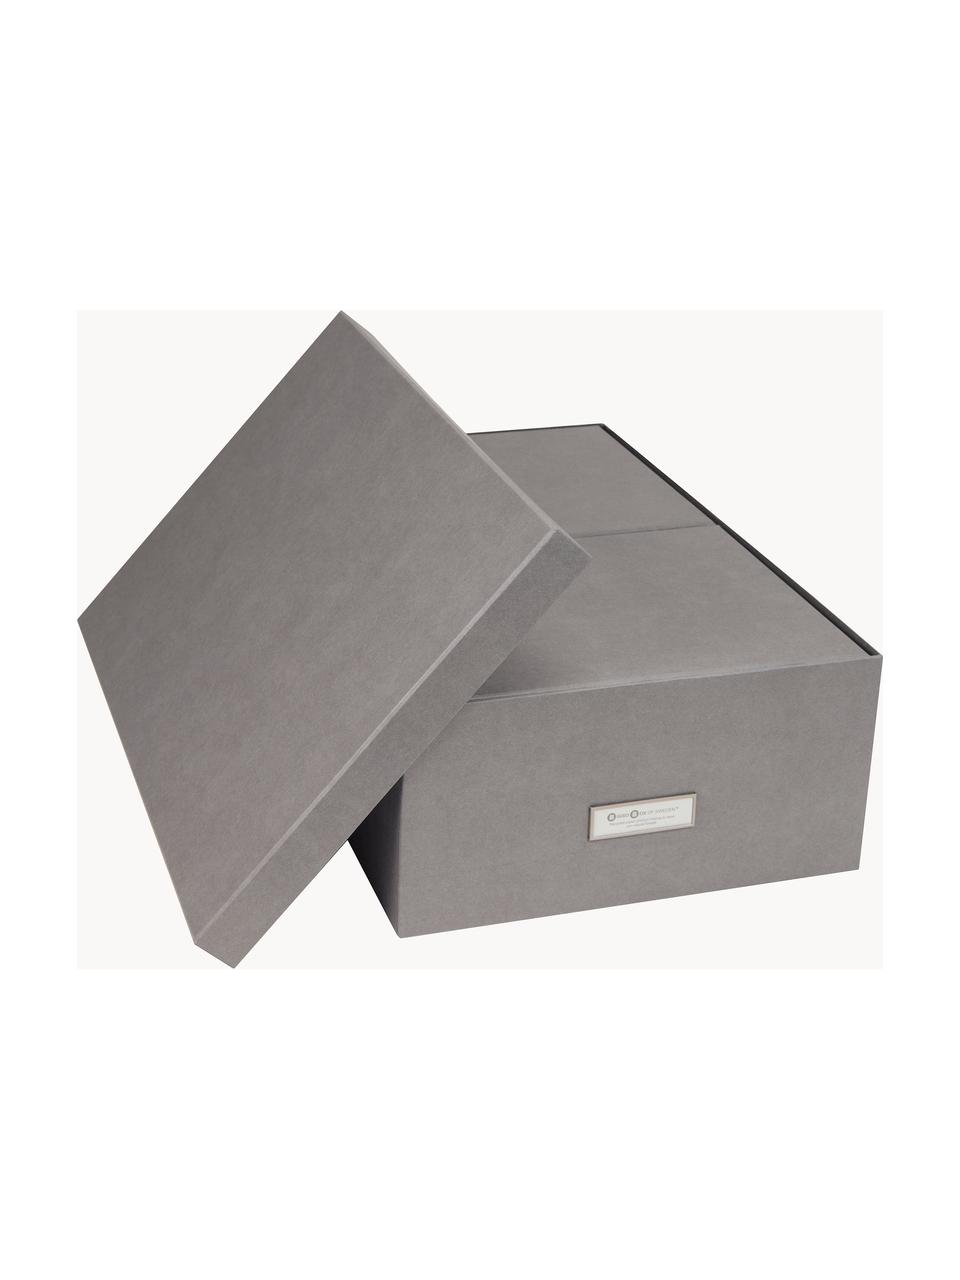 Set de cajas Inge, 3 pzas., Caja: cartón laminado, Gris oscuro, Set de diferentes tamaños